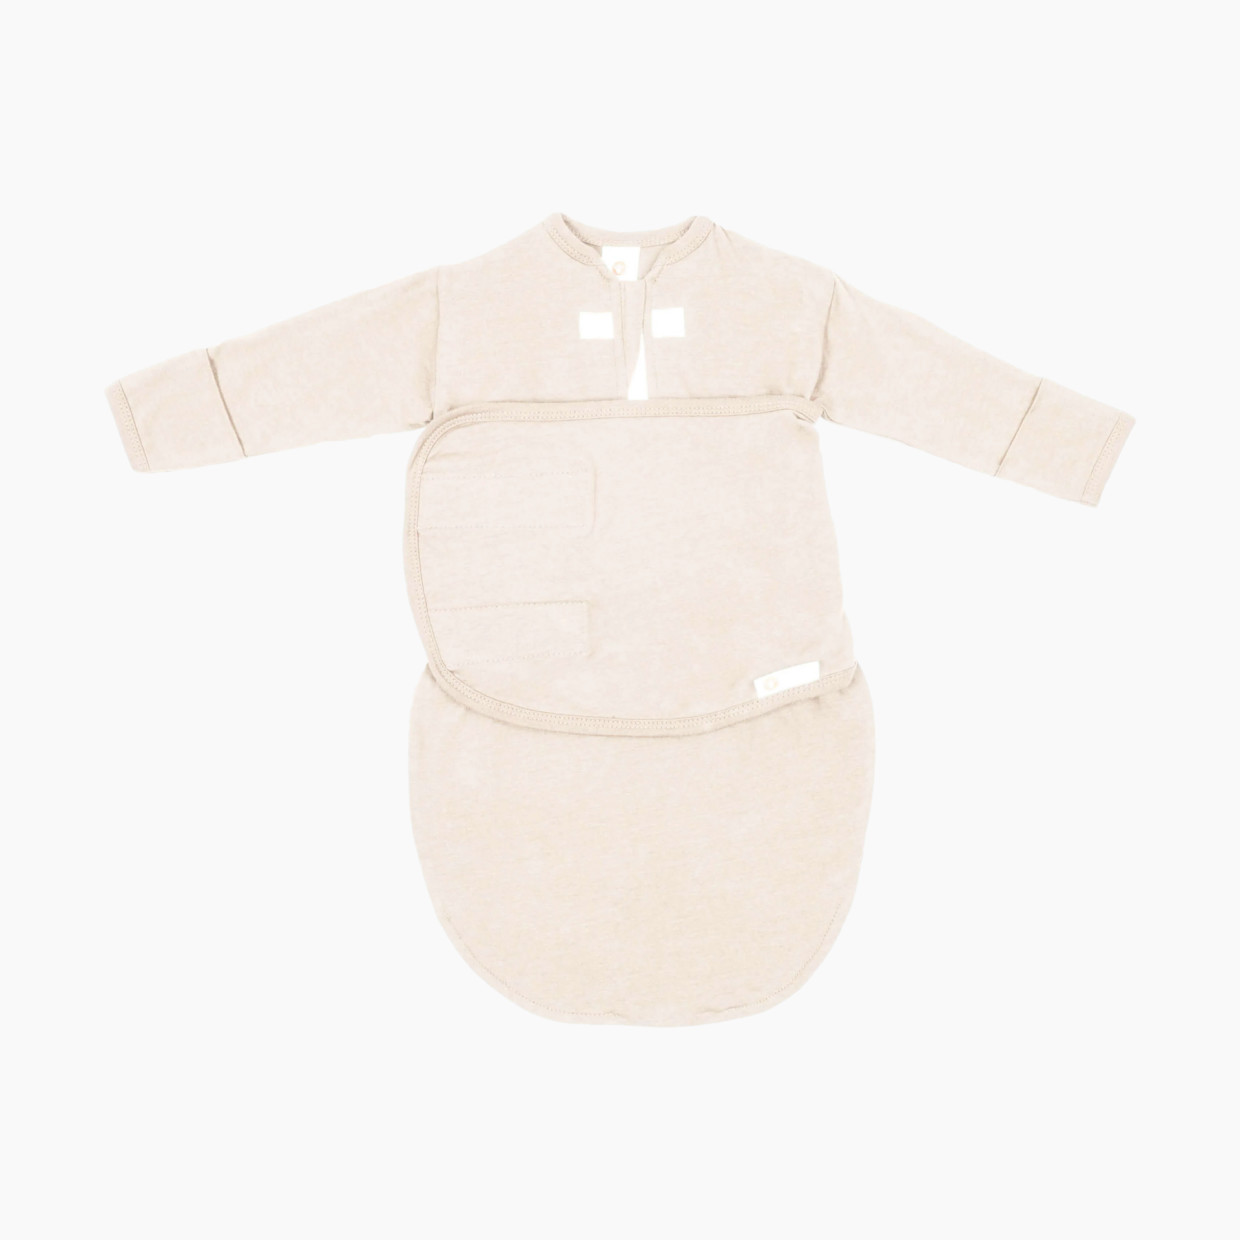 Embe Babies Long Sleeve Swaddle Sack - Cream, Newborn 6-14lbs.